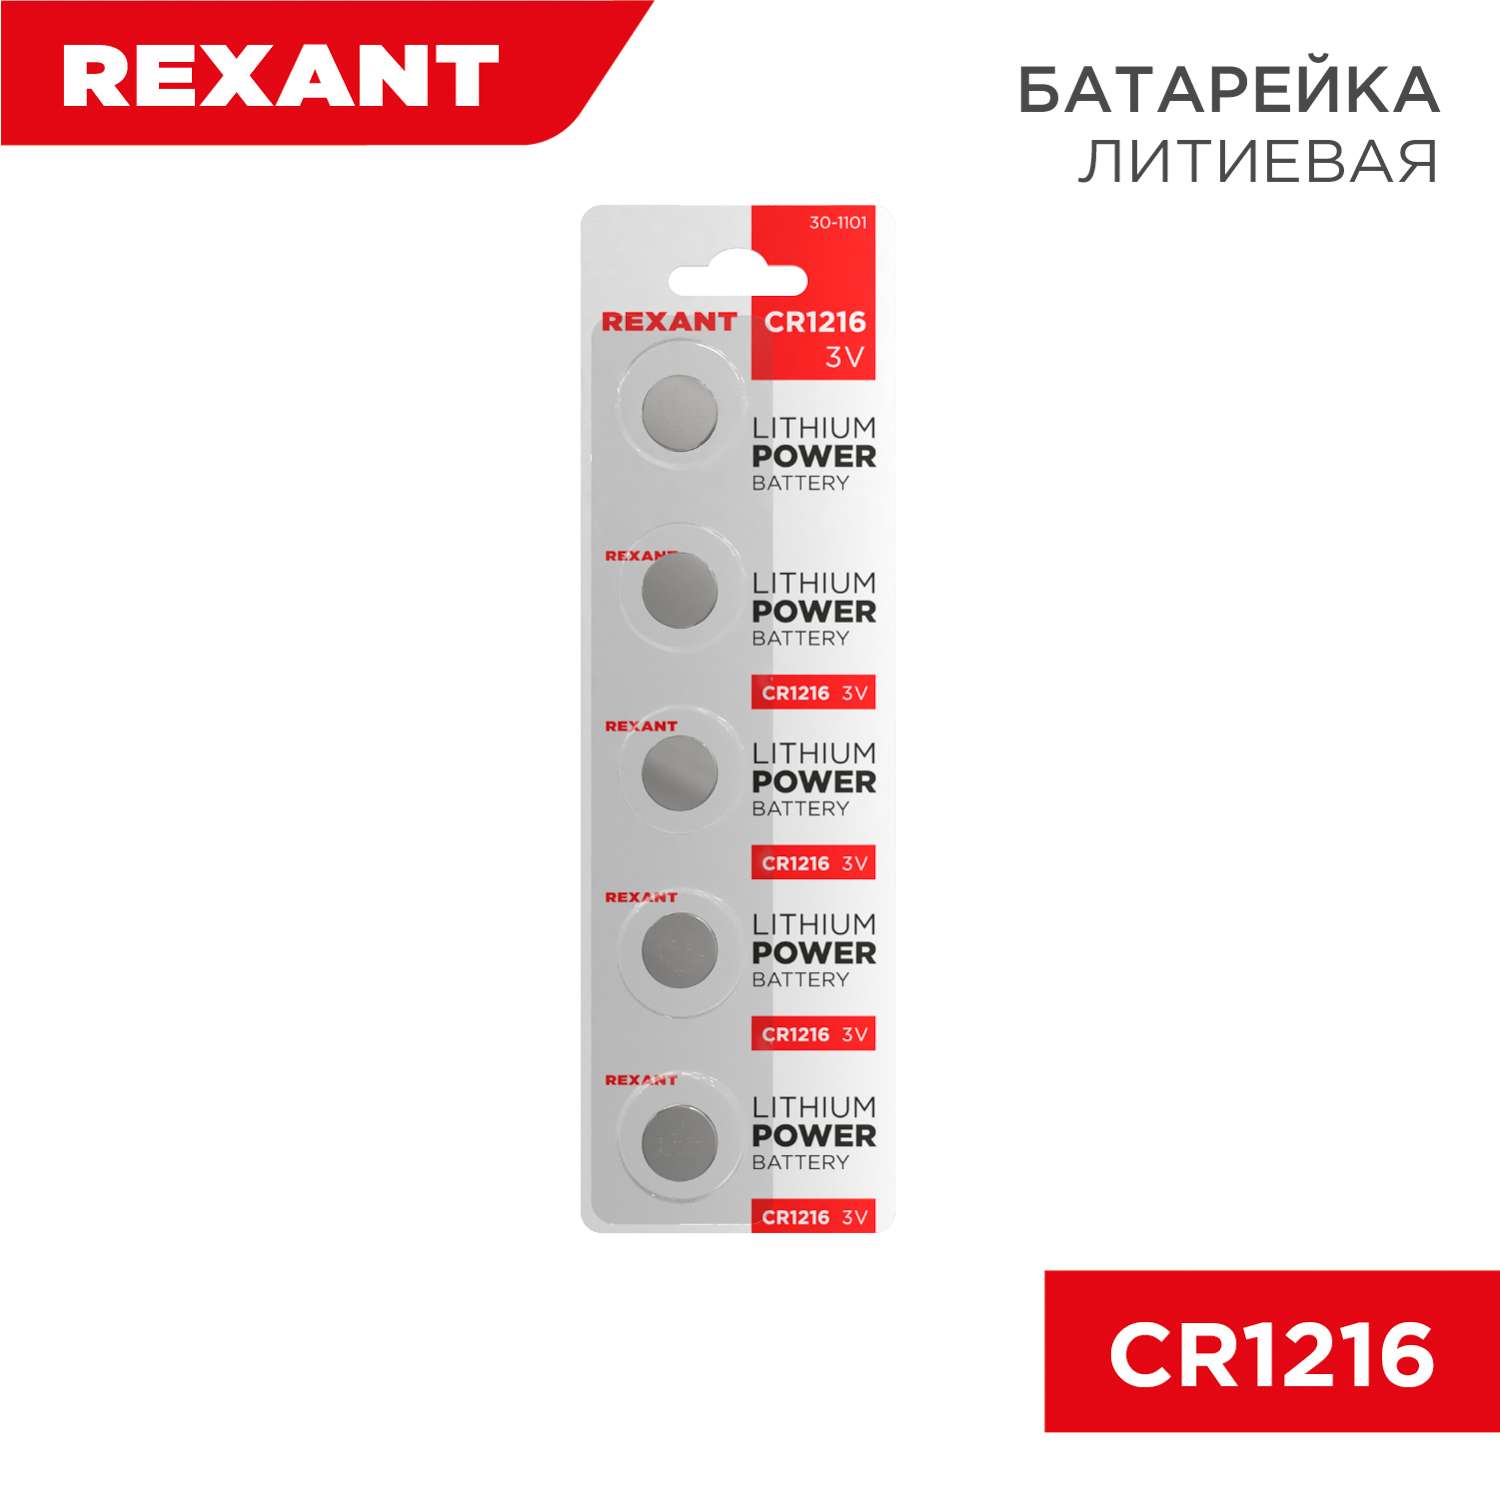 Батарейка REXANT литиевая CR1216 3В 5 штук - фото 1